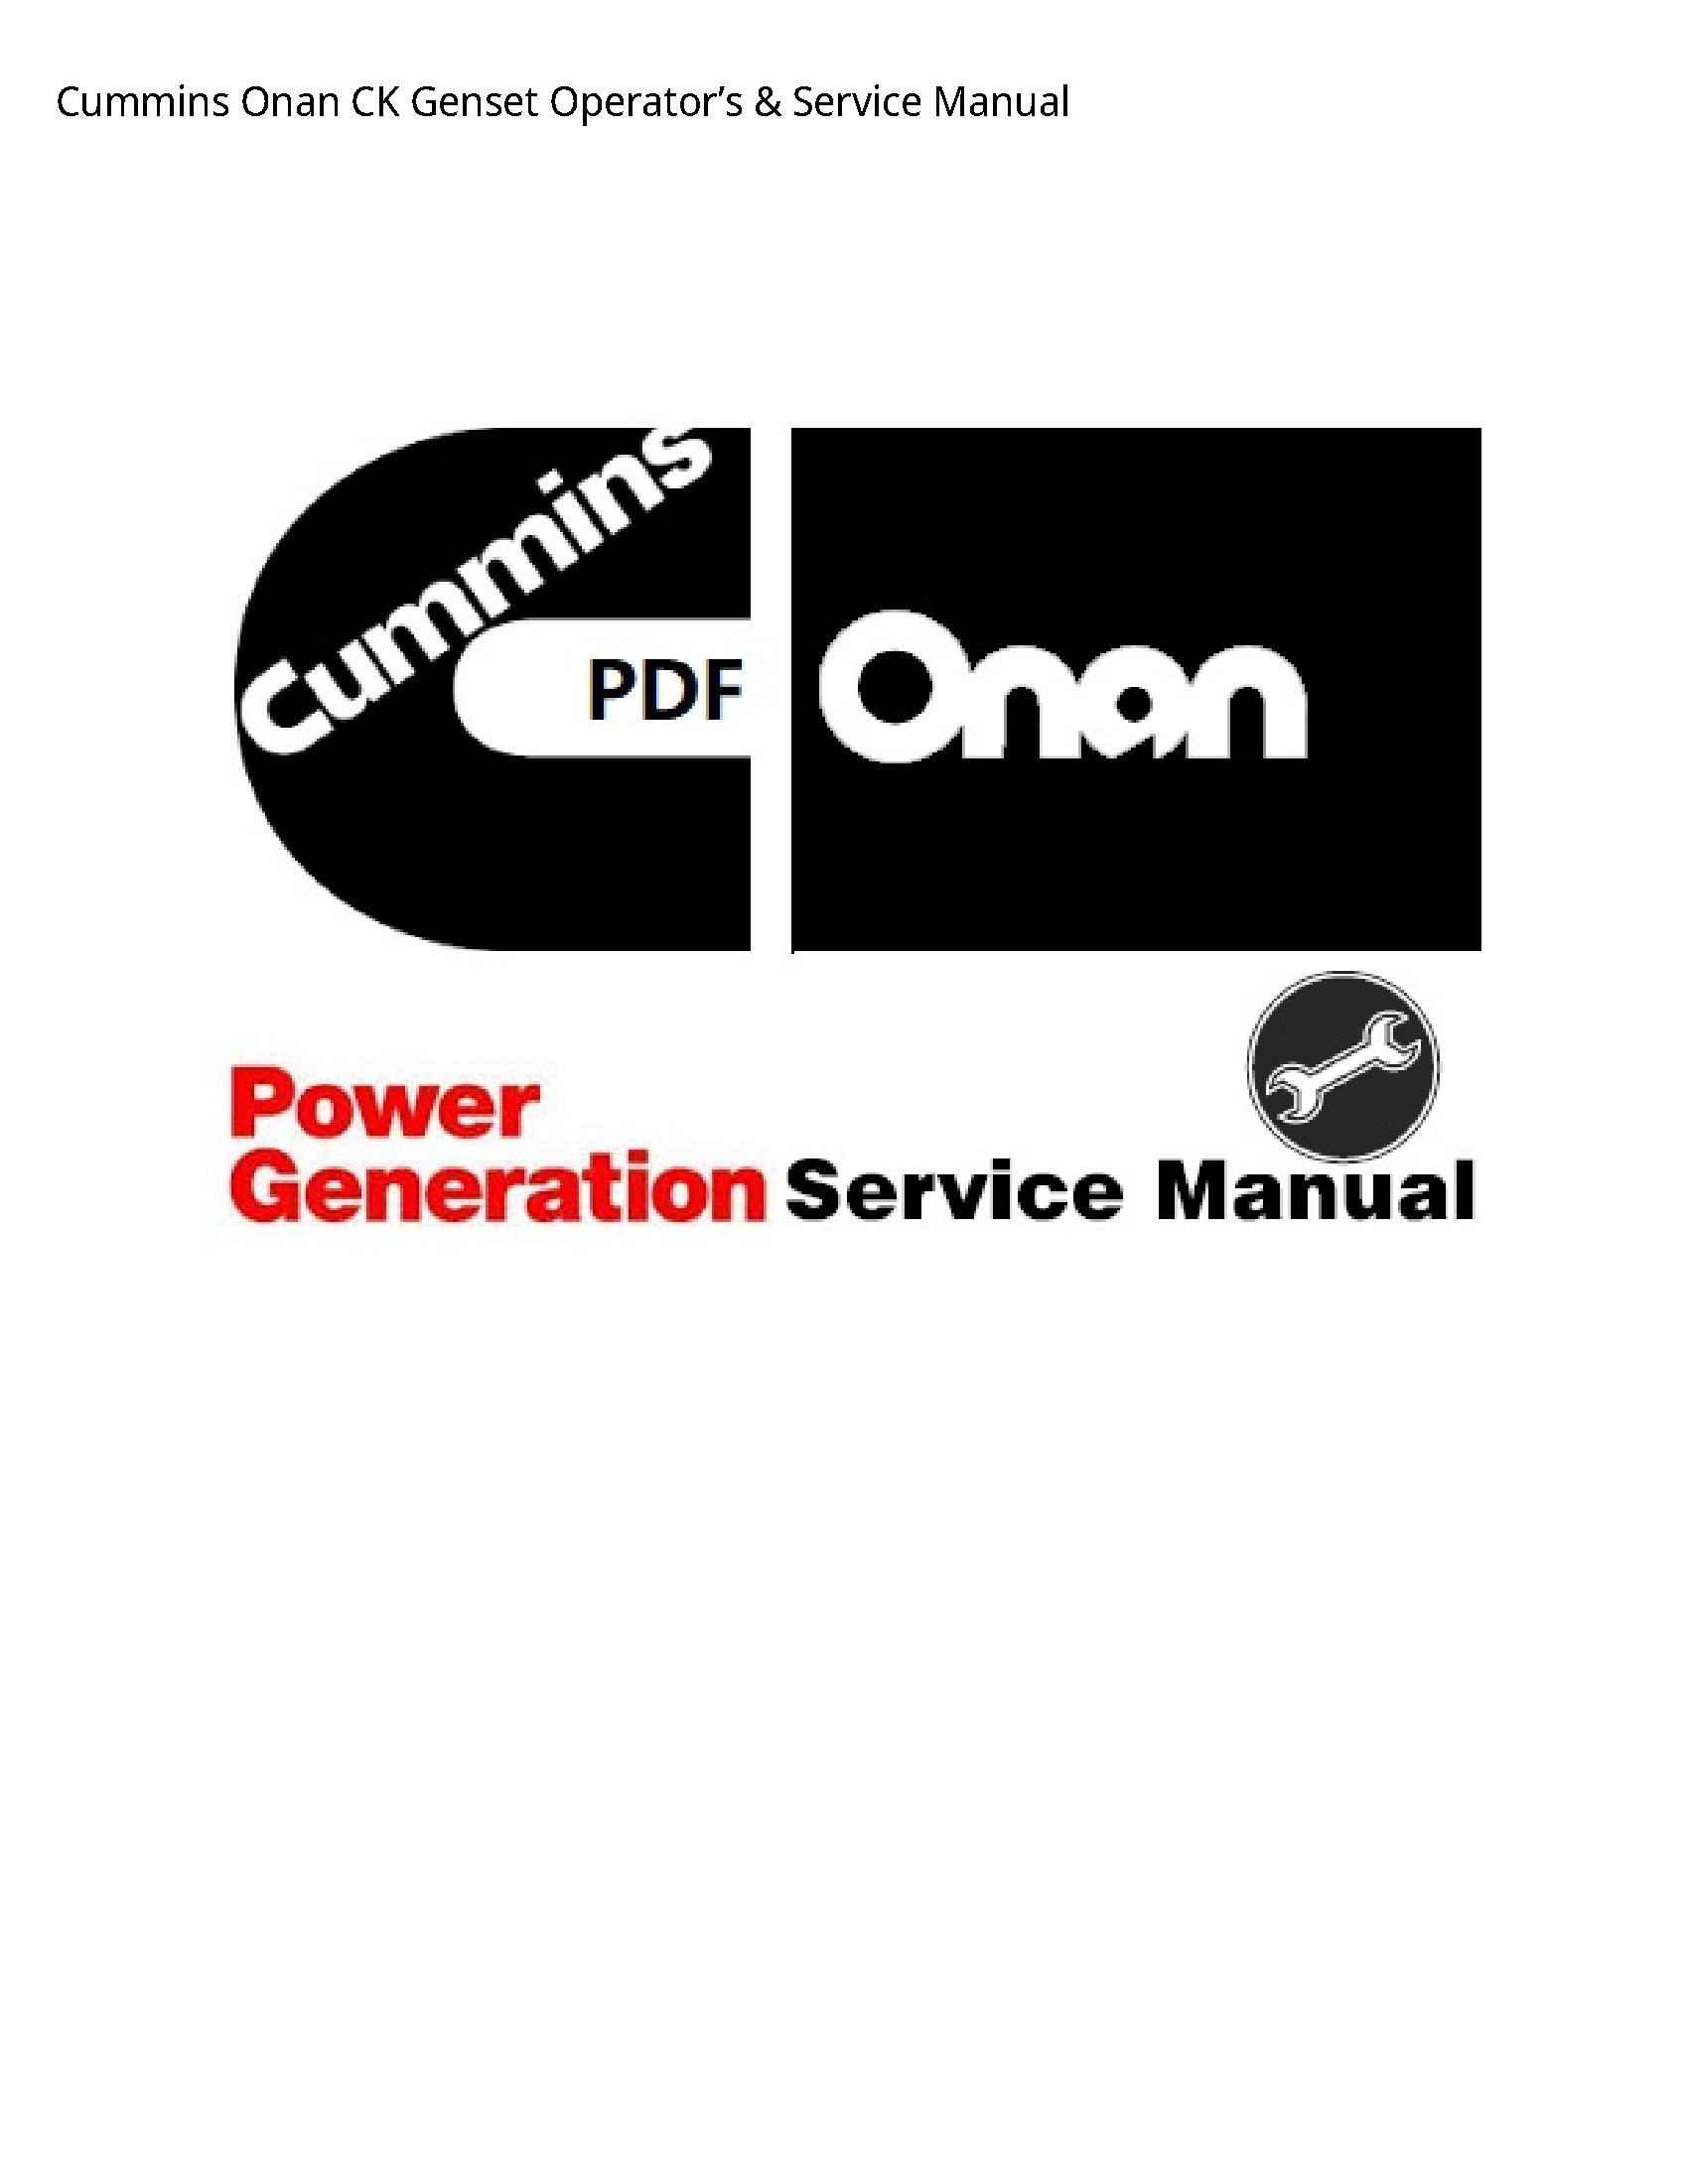 Cummins CK Genset Operator’s Service manual